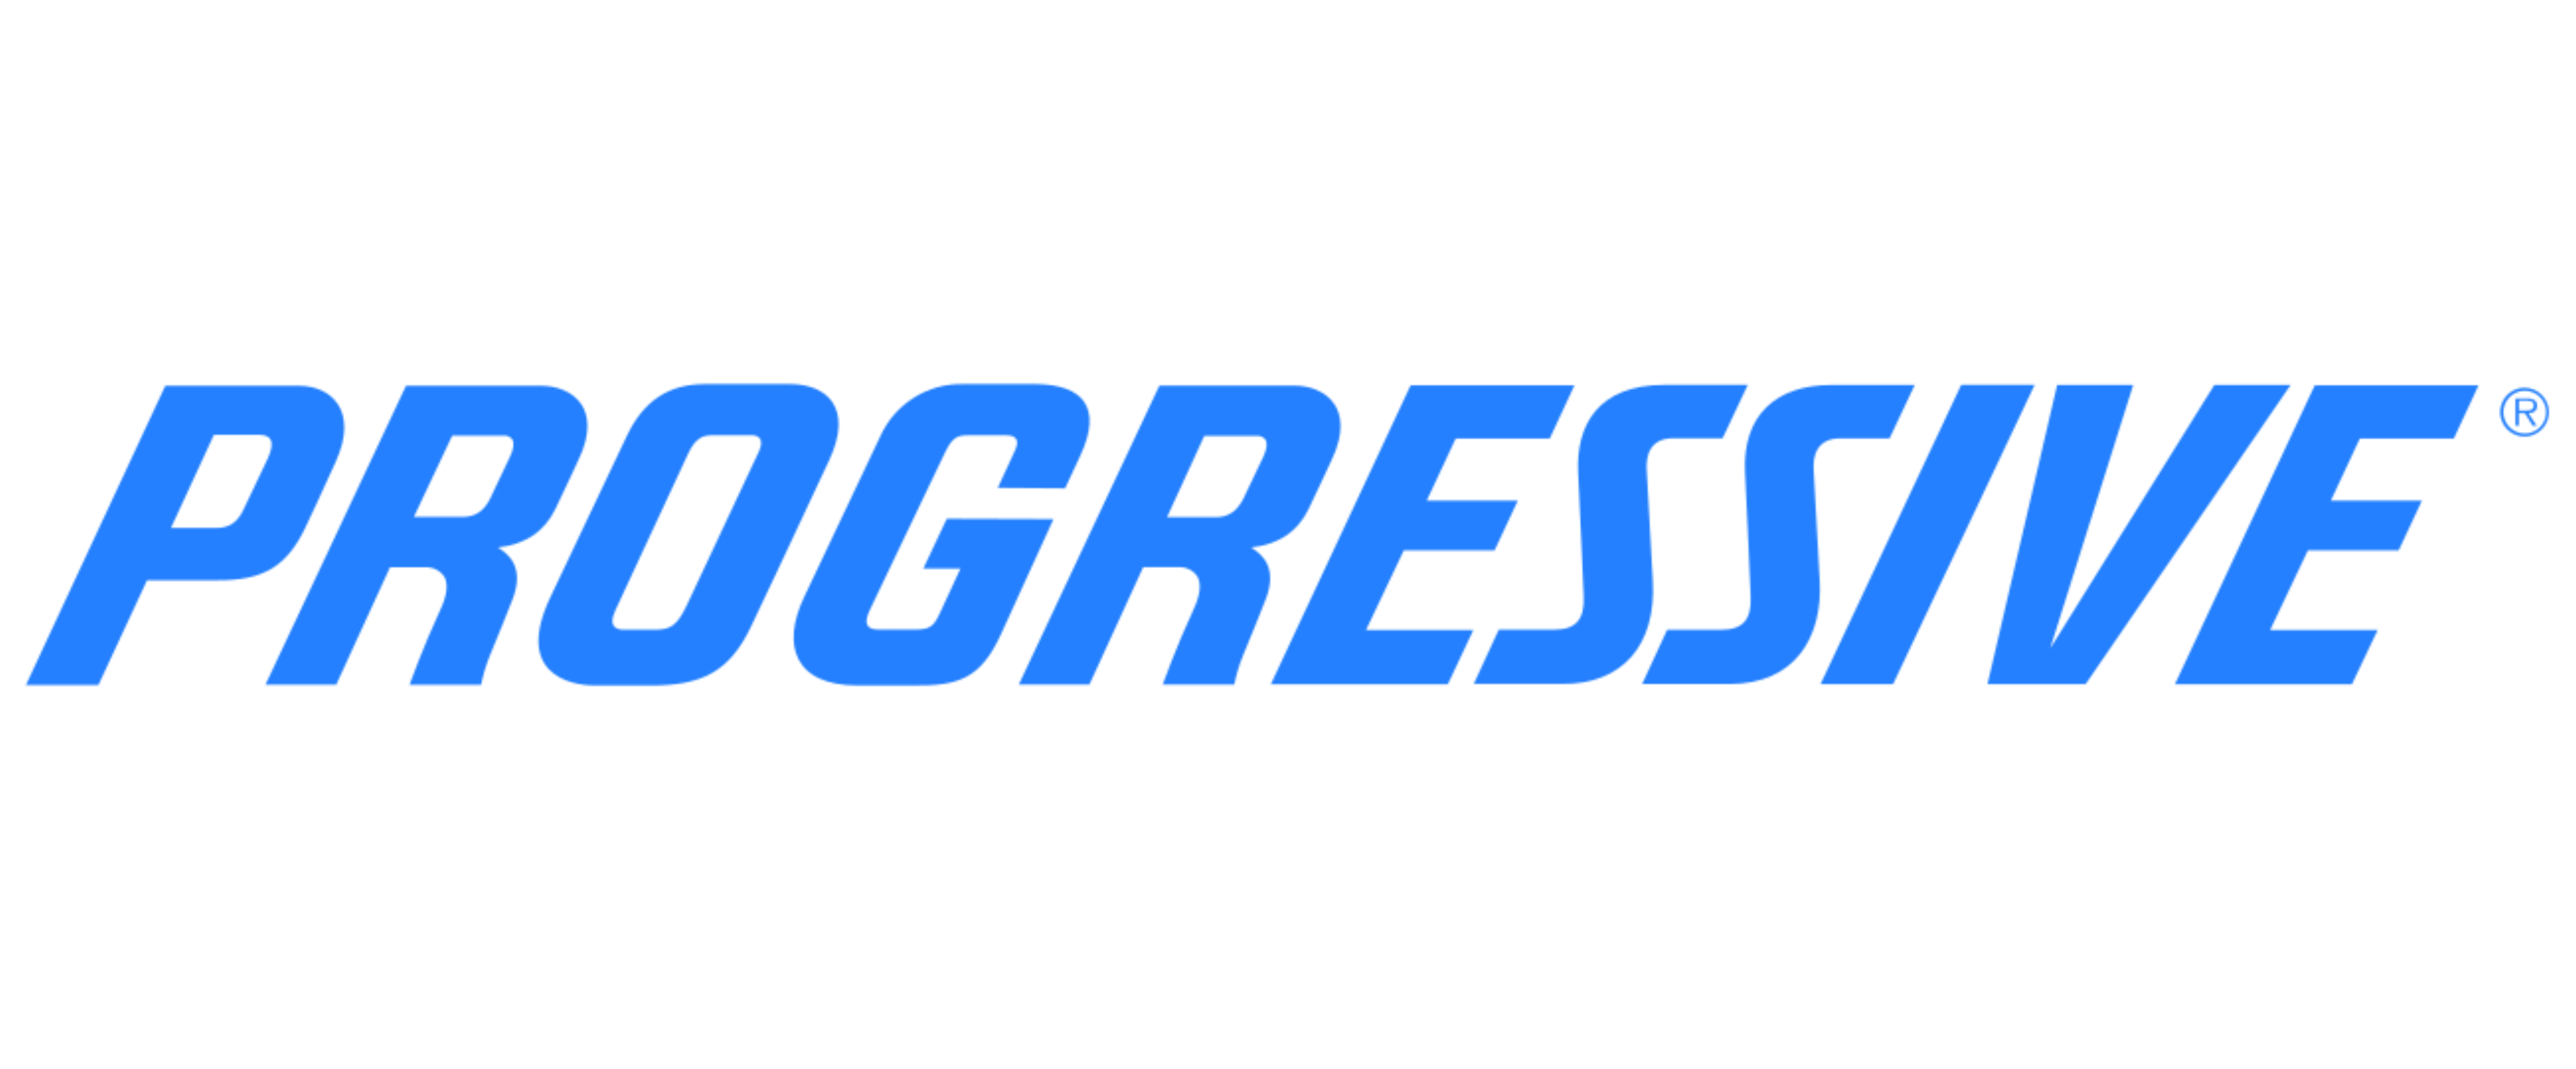 logo for the company progressive